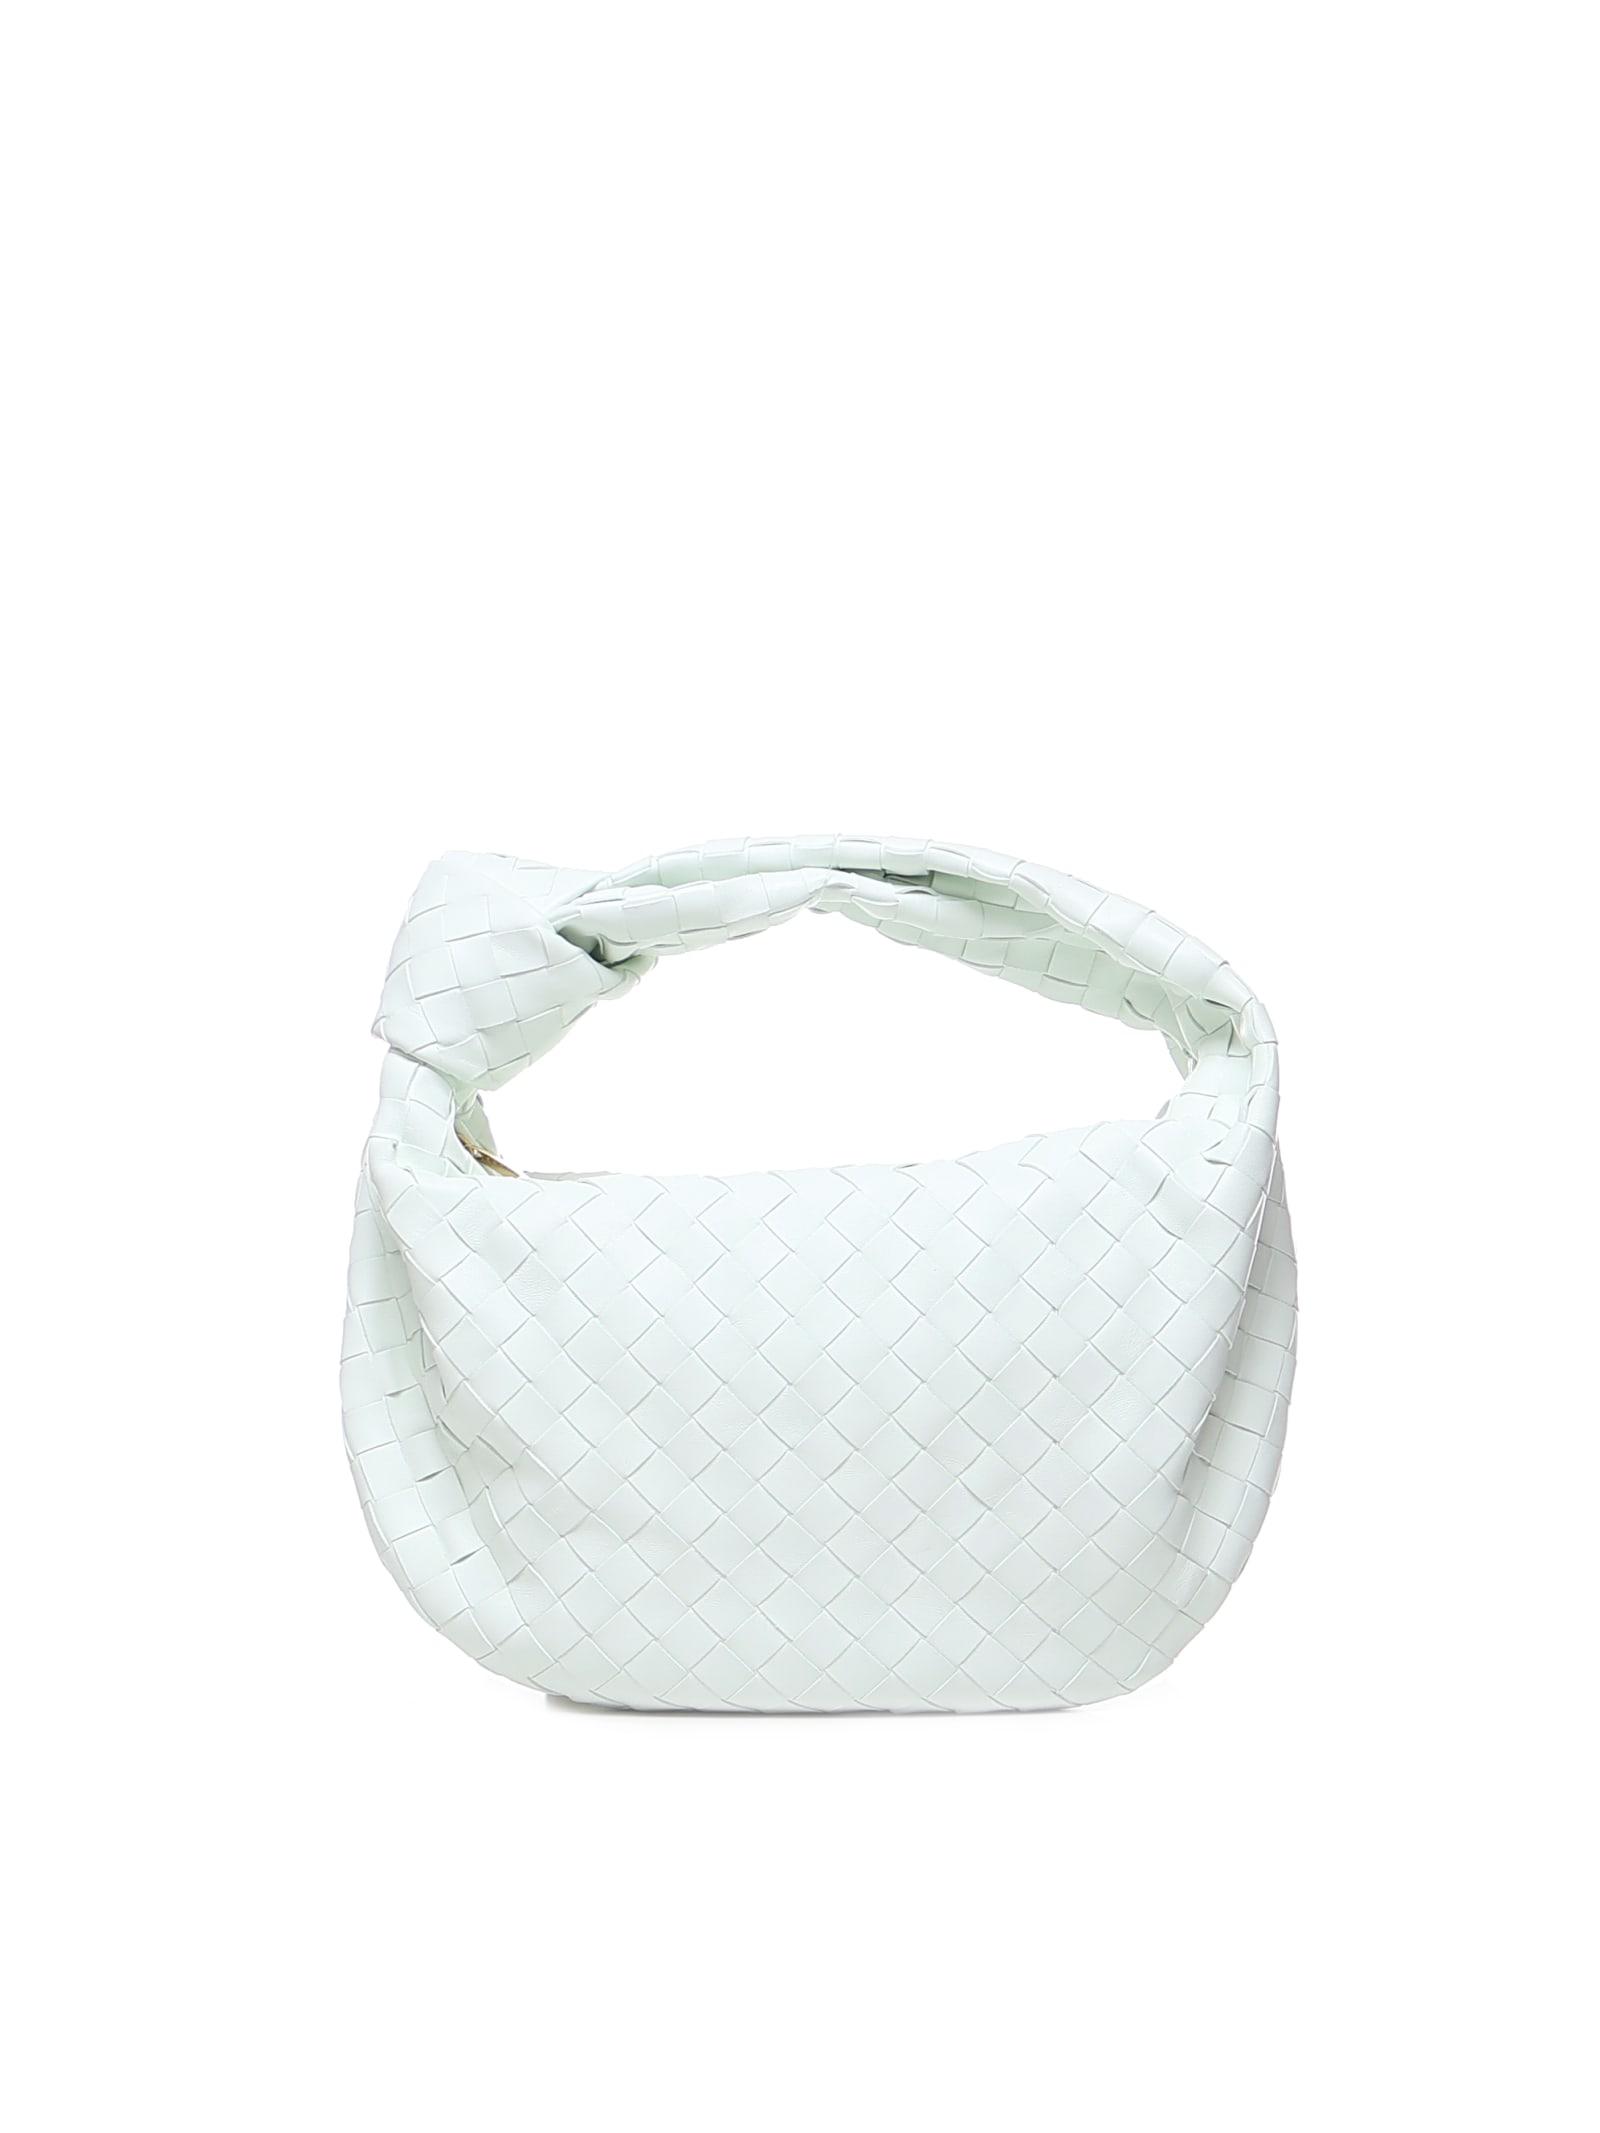 Bottega Veneta White Teen Jodie Intrecciato Leather Shoulder Bag